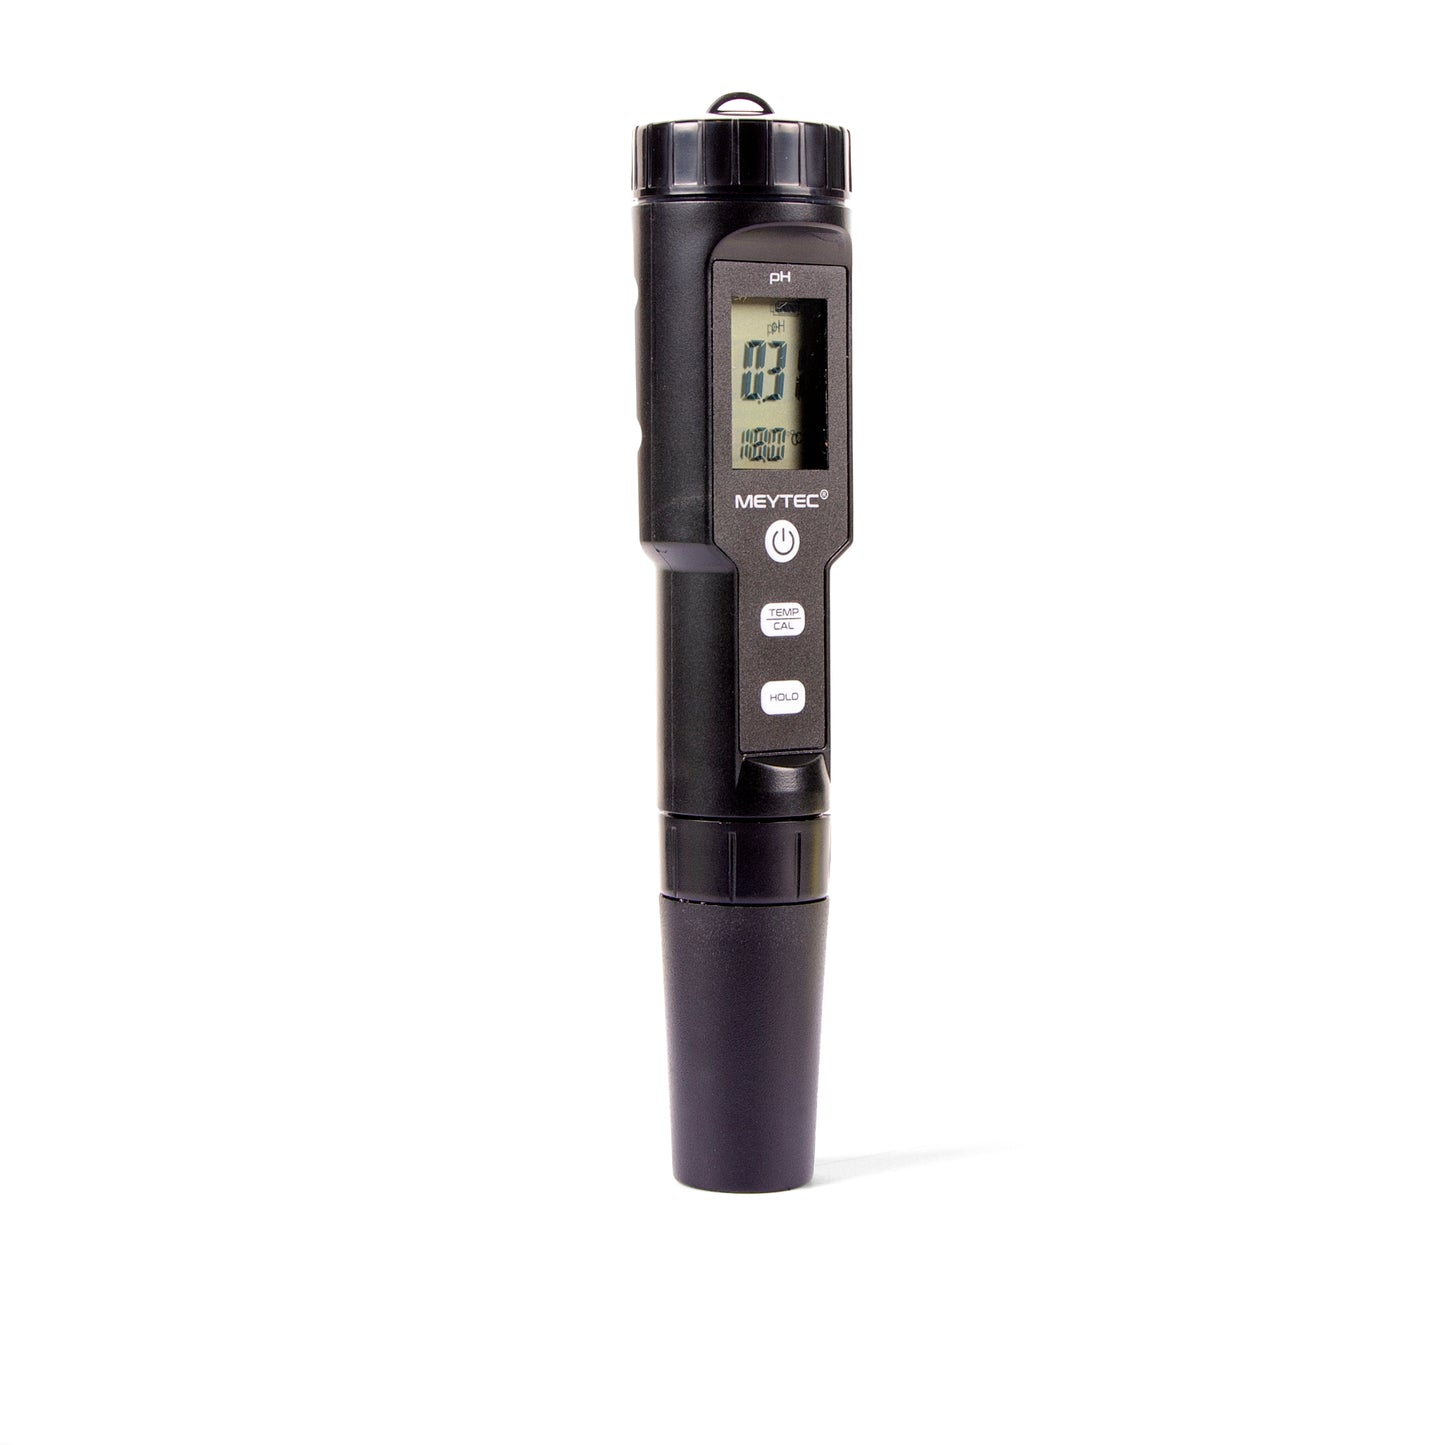 PH Meter | Meytec® GT-200PH + Calibration Kit